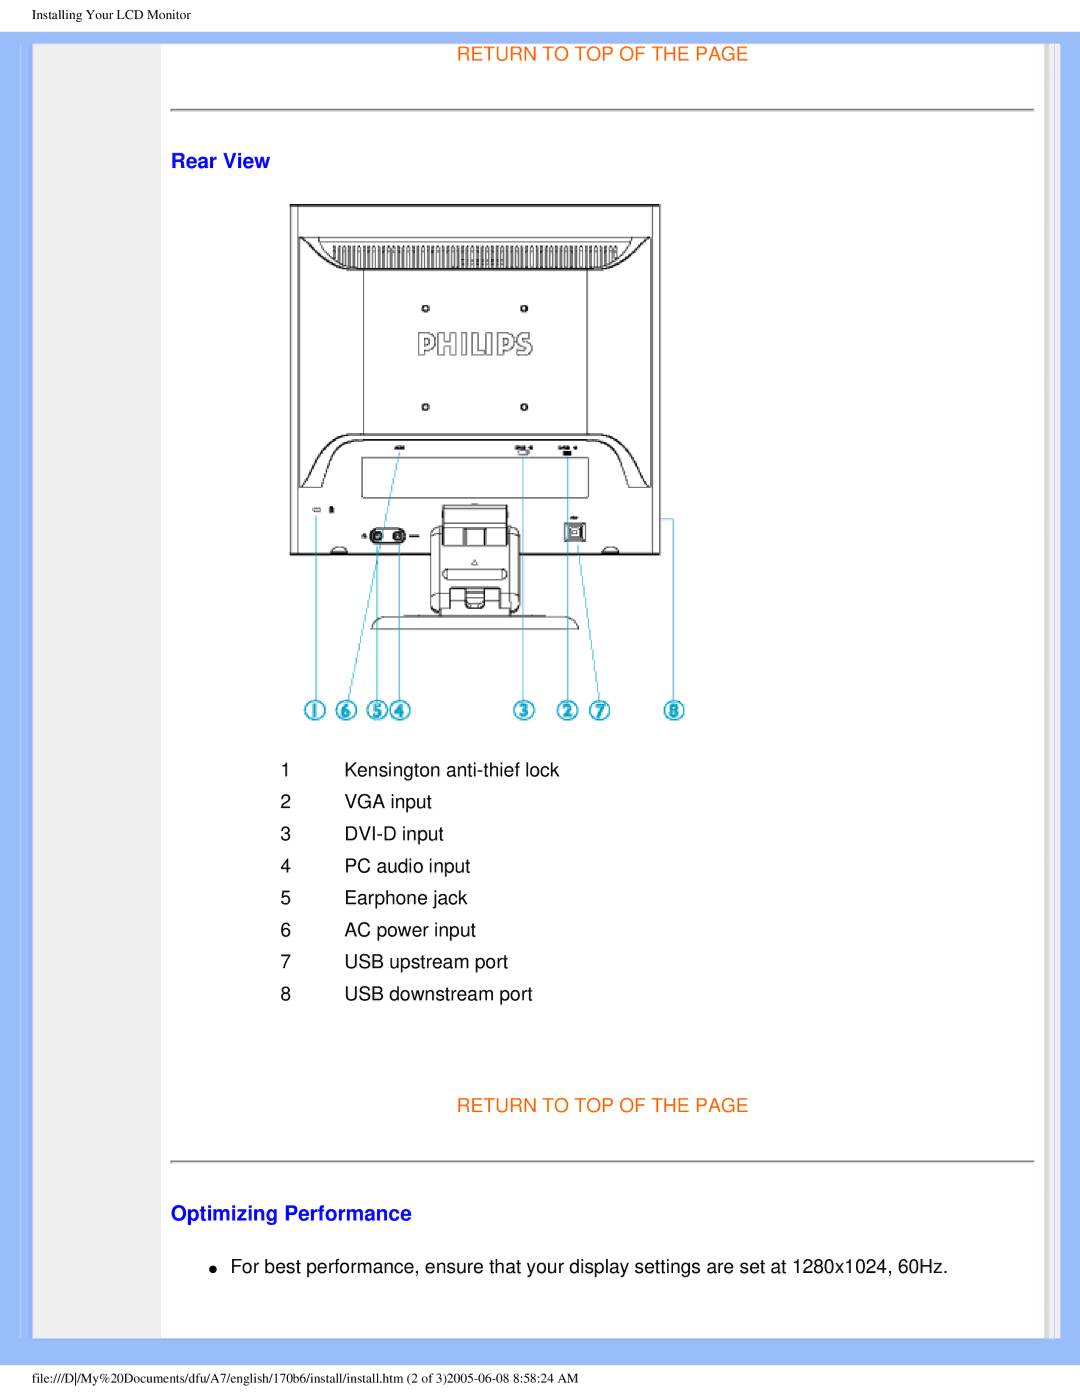 Philips 170B6 user manual Rear View, Optimizing Performance 